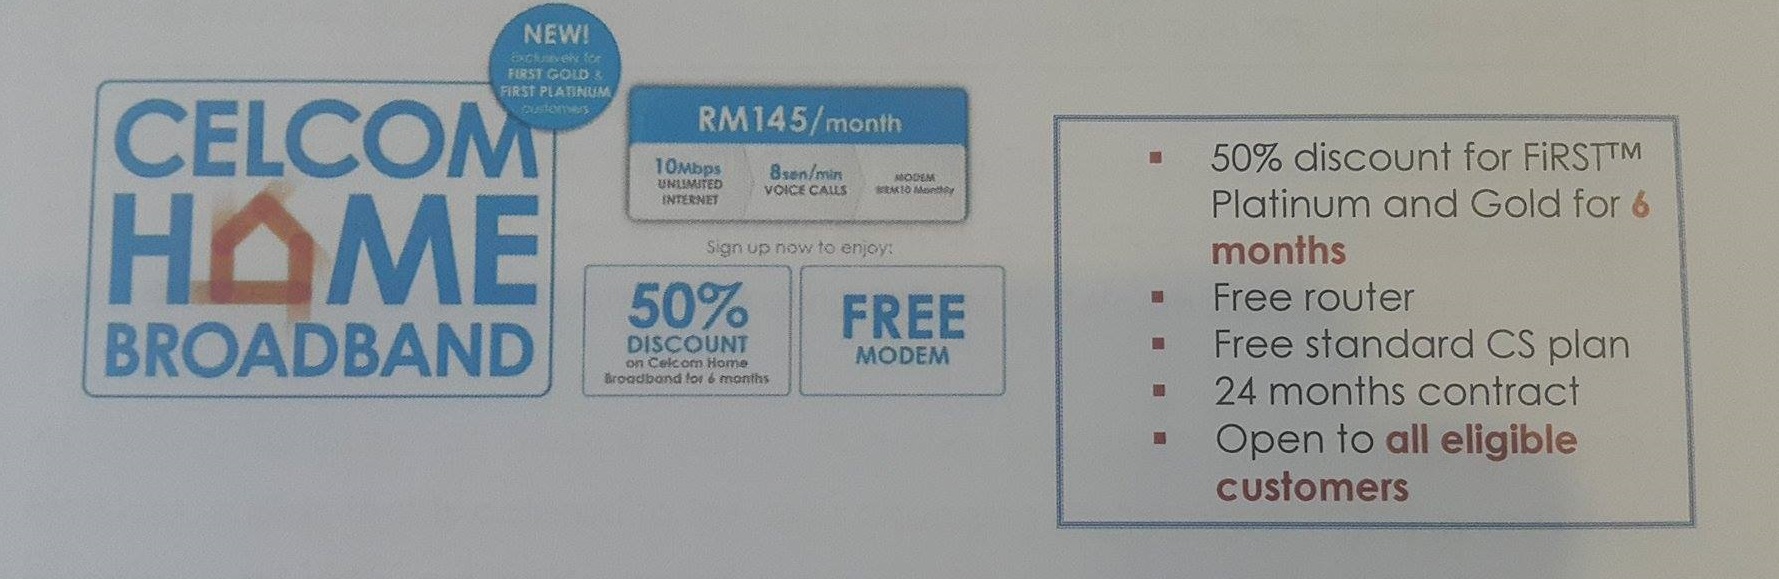 Celcom Home Broadband 寬頻配套正式推出：每月僅需 RM145 就能獲得 10Mbps 網速；First Platinum & First Gold 後付用戶首 6 個月獲 50% 月費折扣！ 1